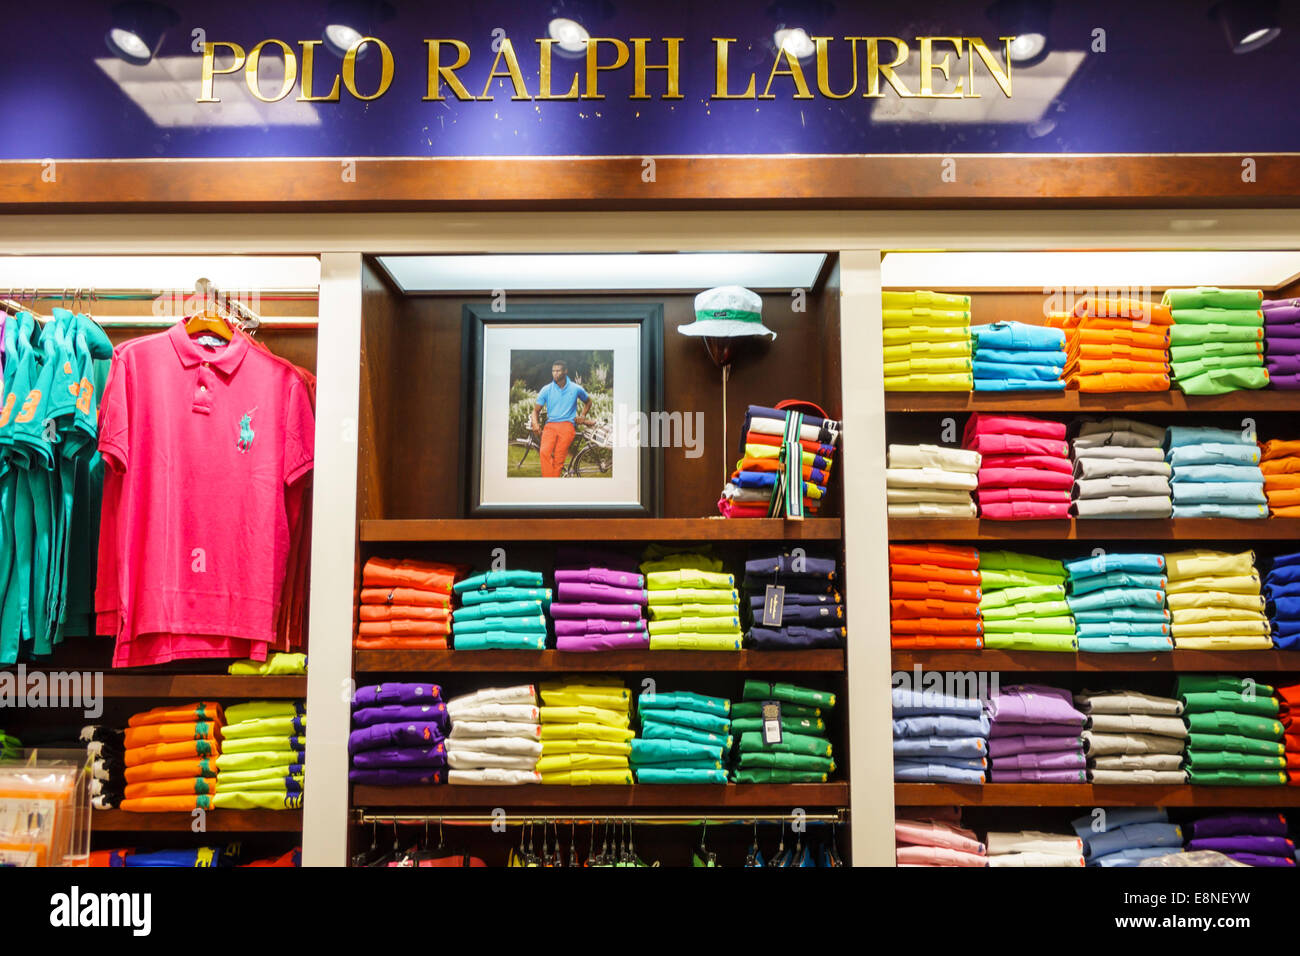 I love Ralph Lauren's store displays : r/NavyBlazer